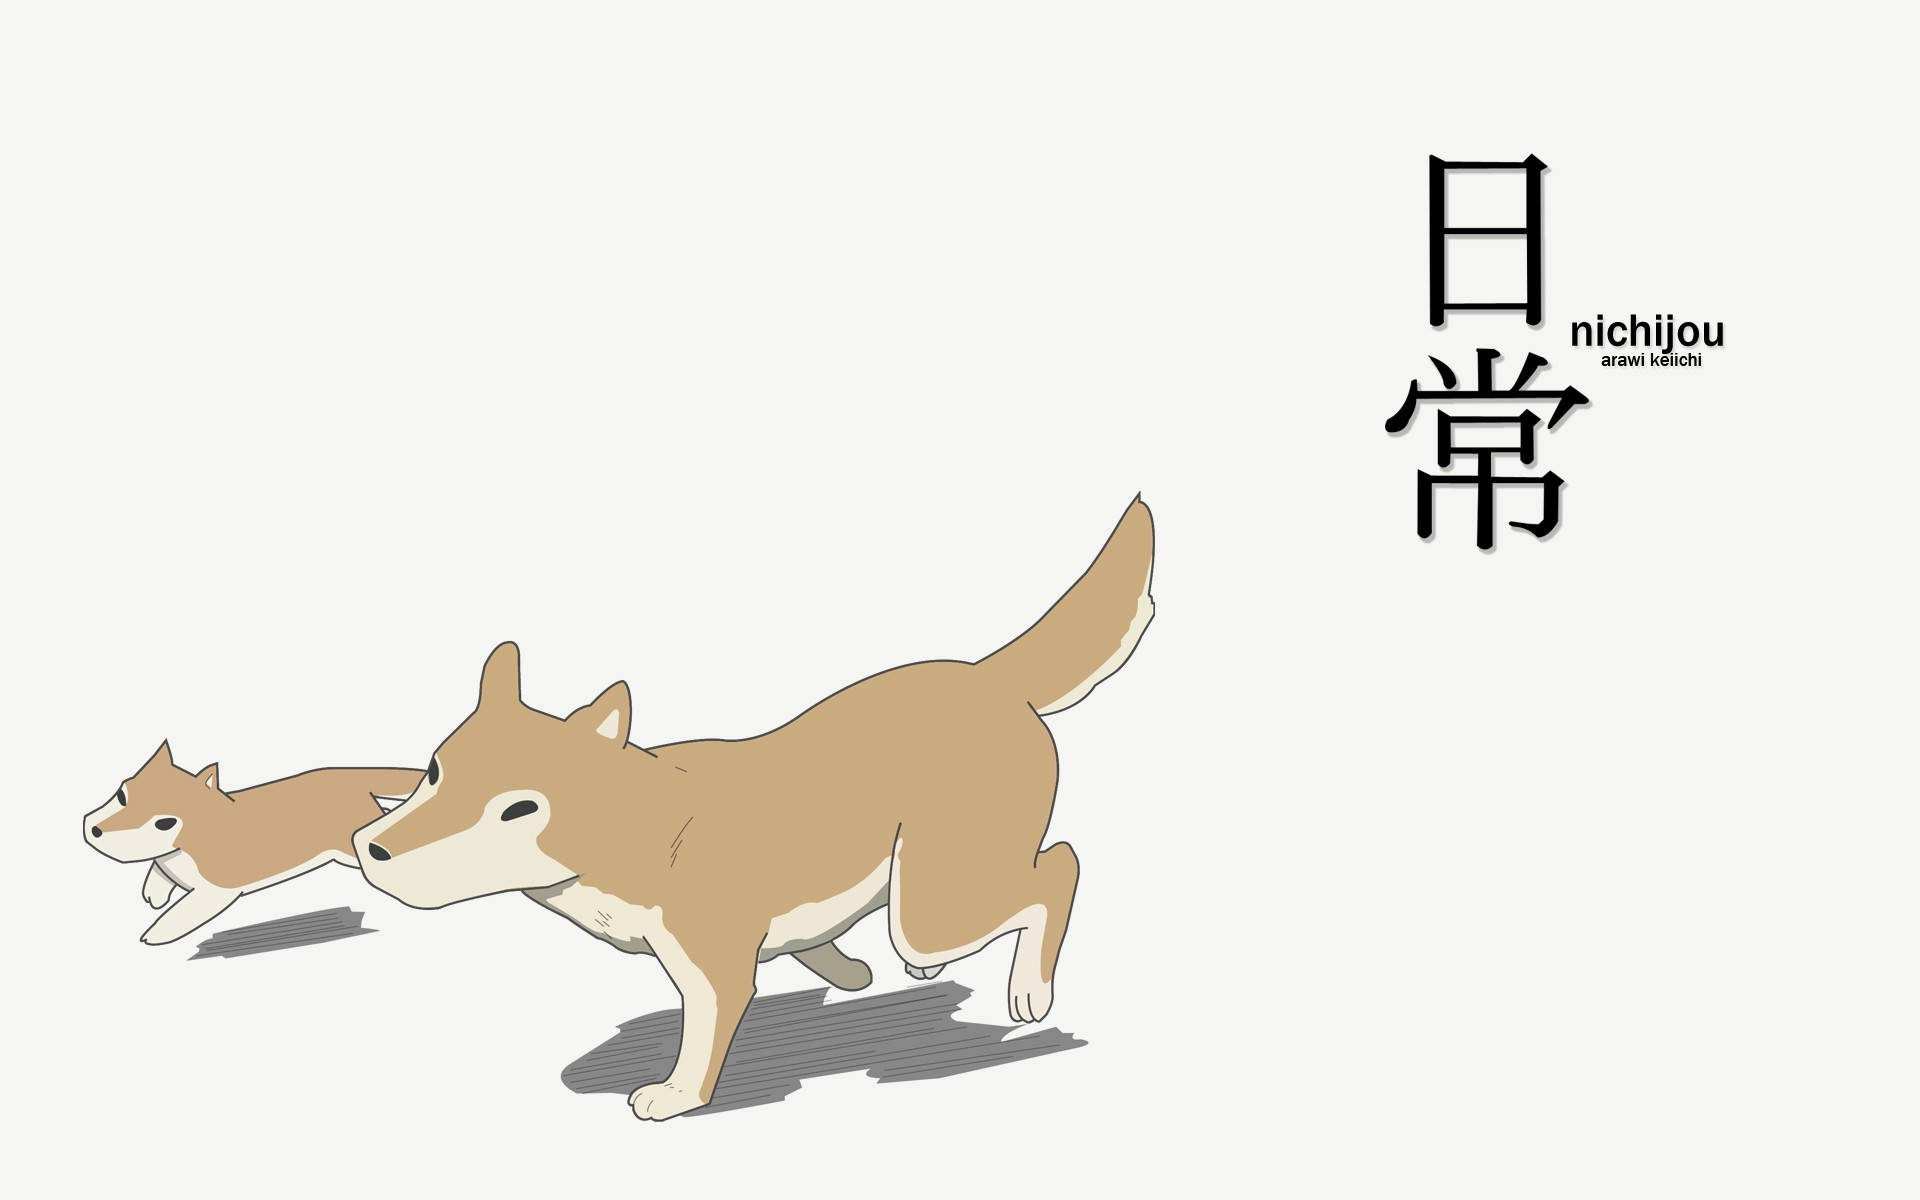 Nichijou Buddy Dog With White Backdrop Background